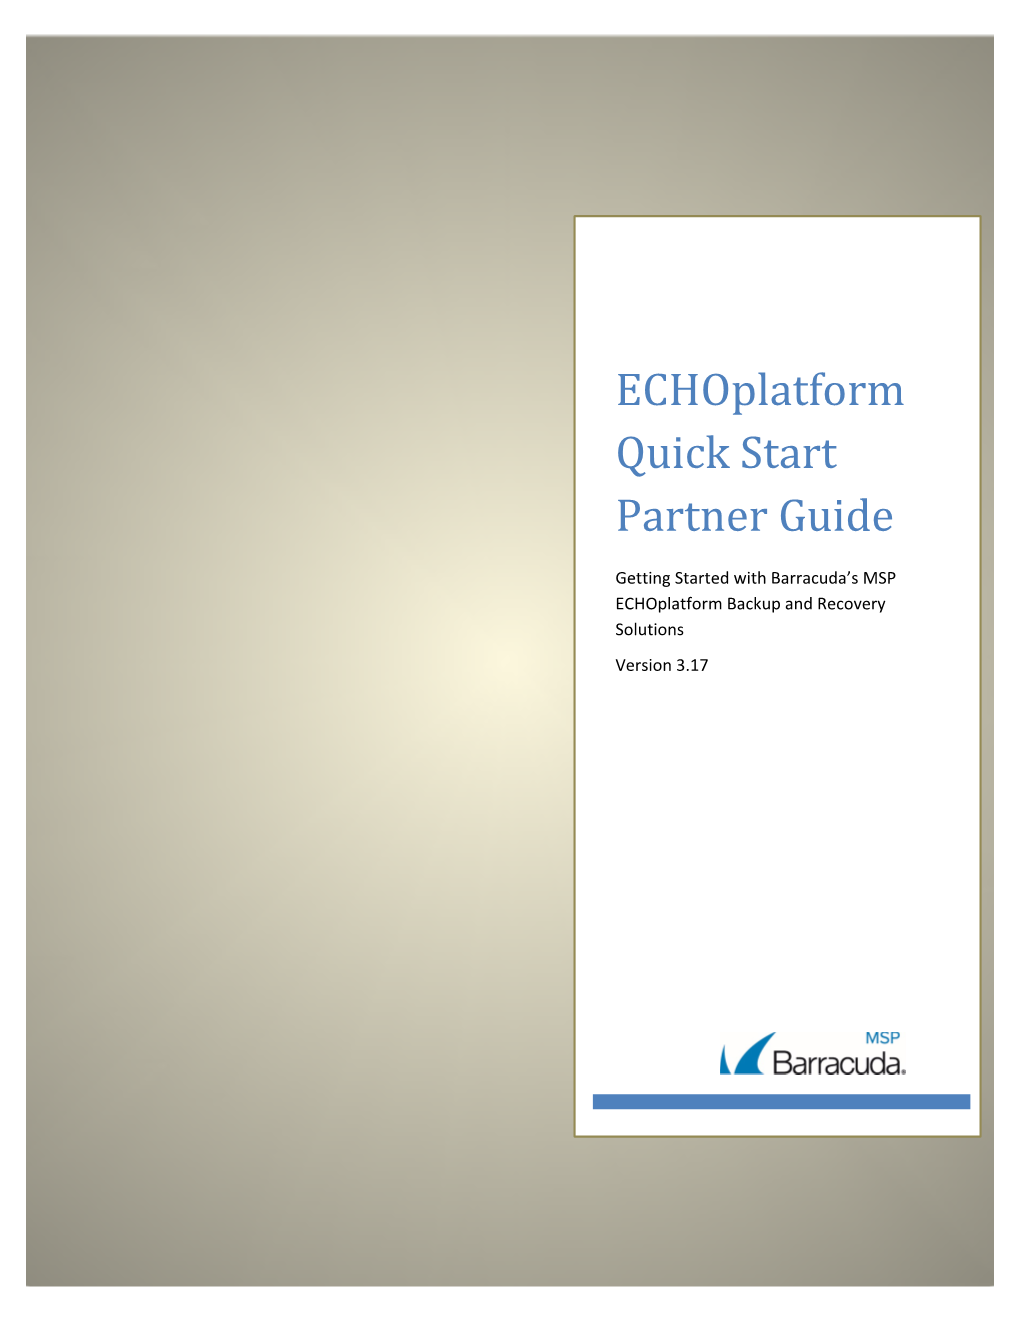 Echoplatform Quick Start Partner Guide